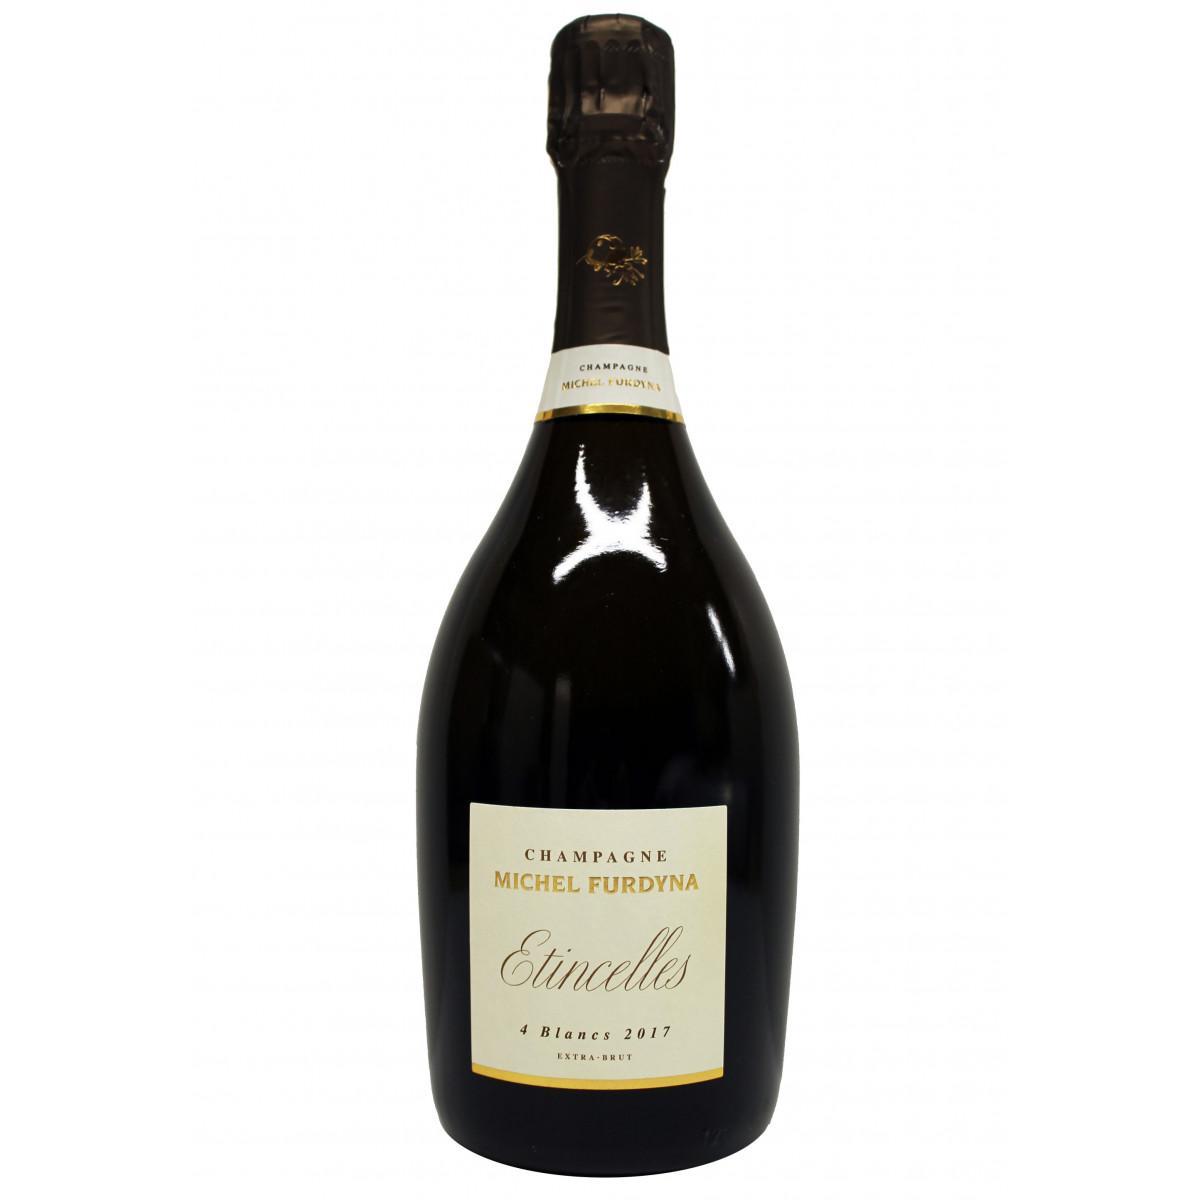 michel furdyna champagne extra brut etincelles 2017